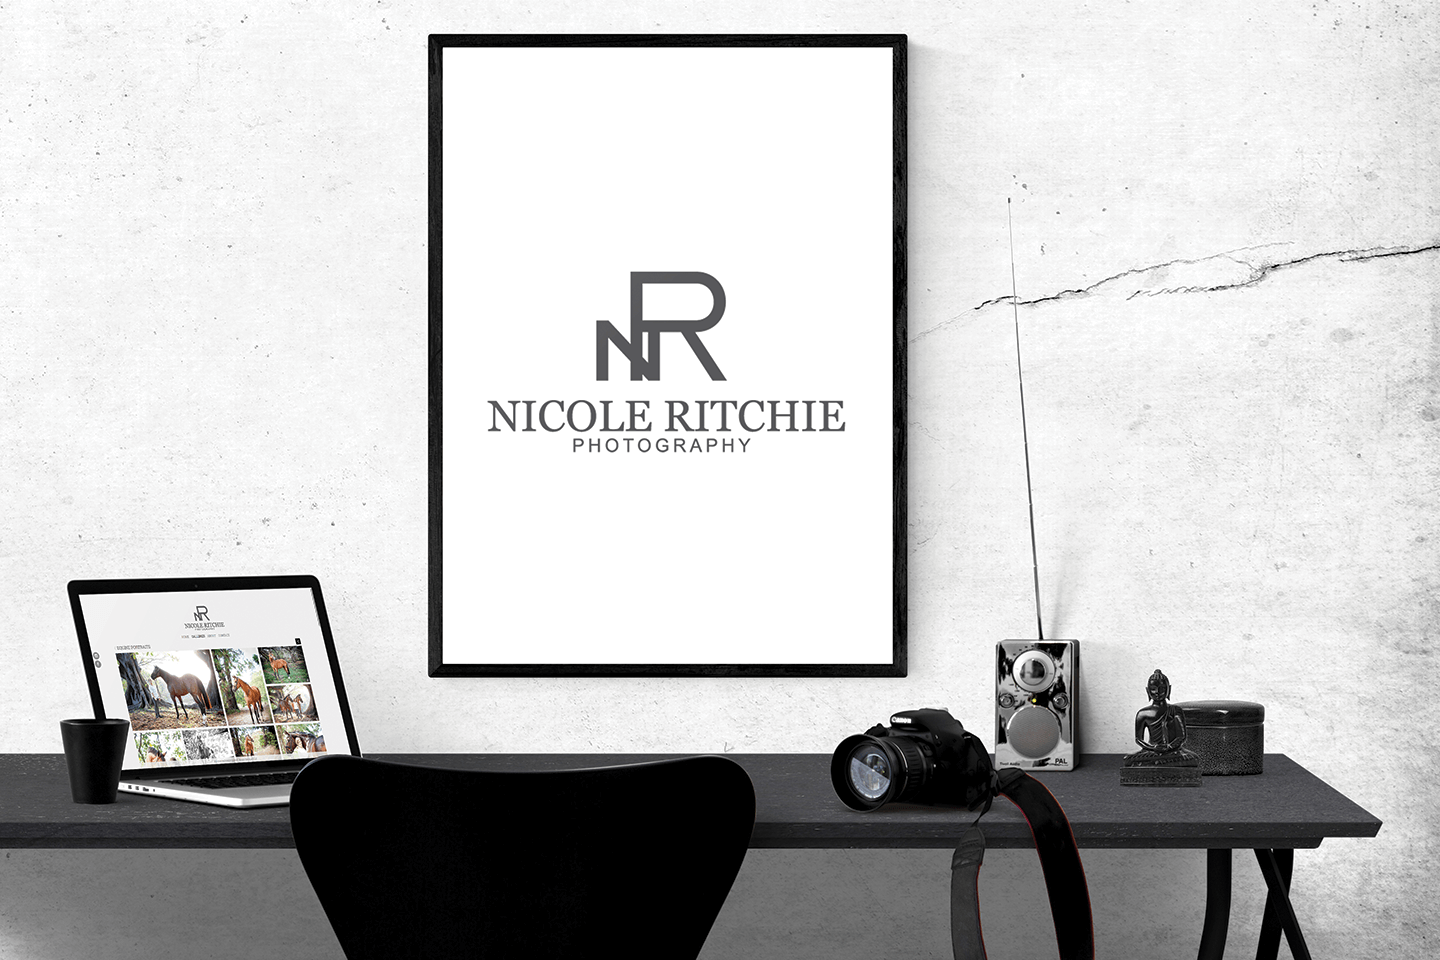 Nicole Ritchie Photography - Ben Ryan Portfolio, Freelance Web Developer